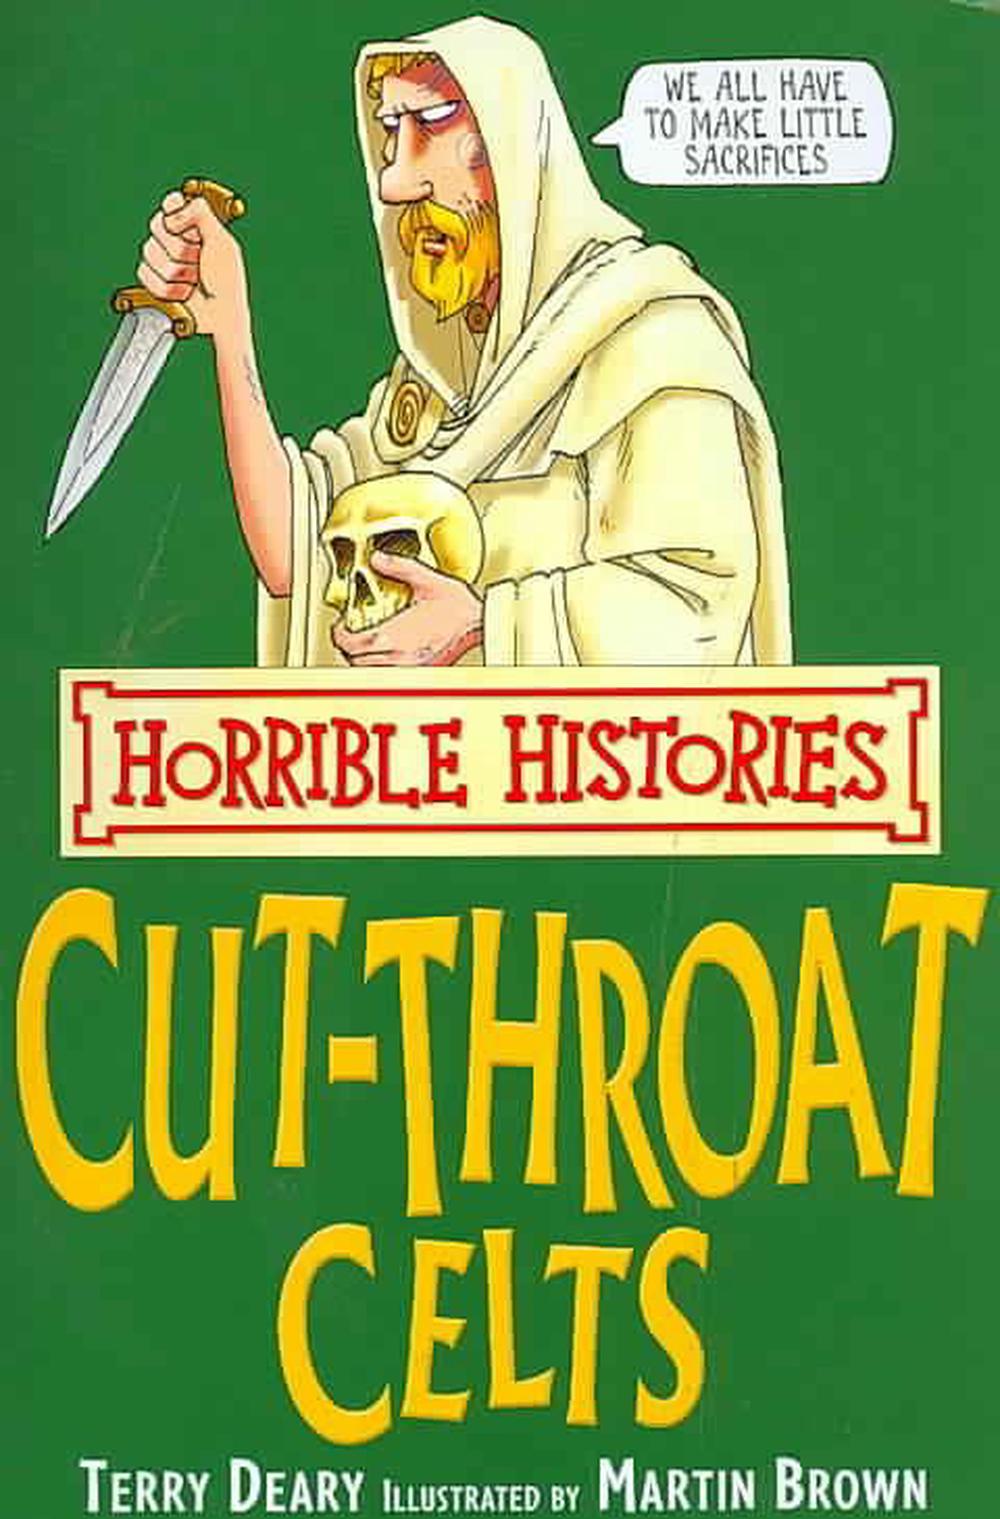 The Cut-throat Celts